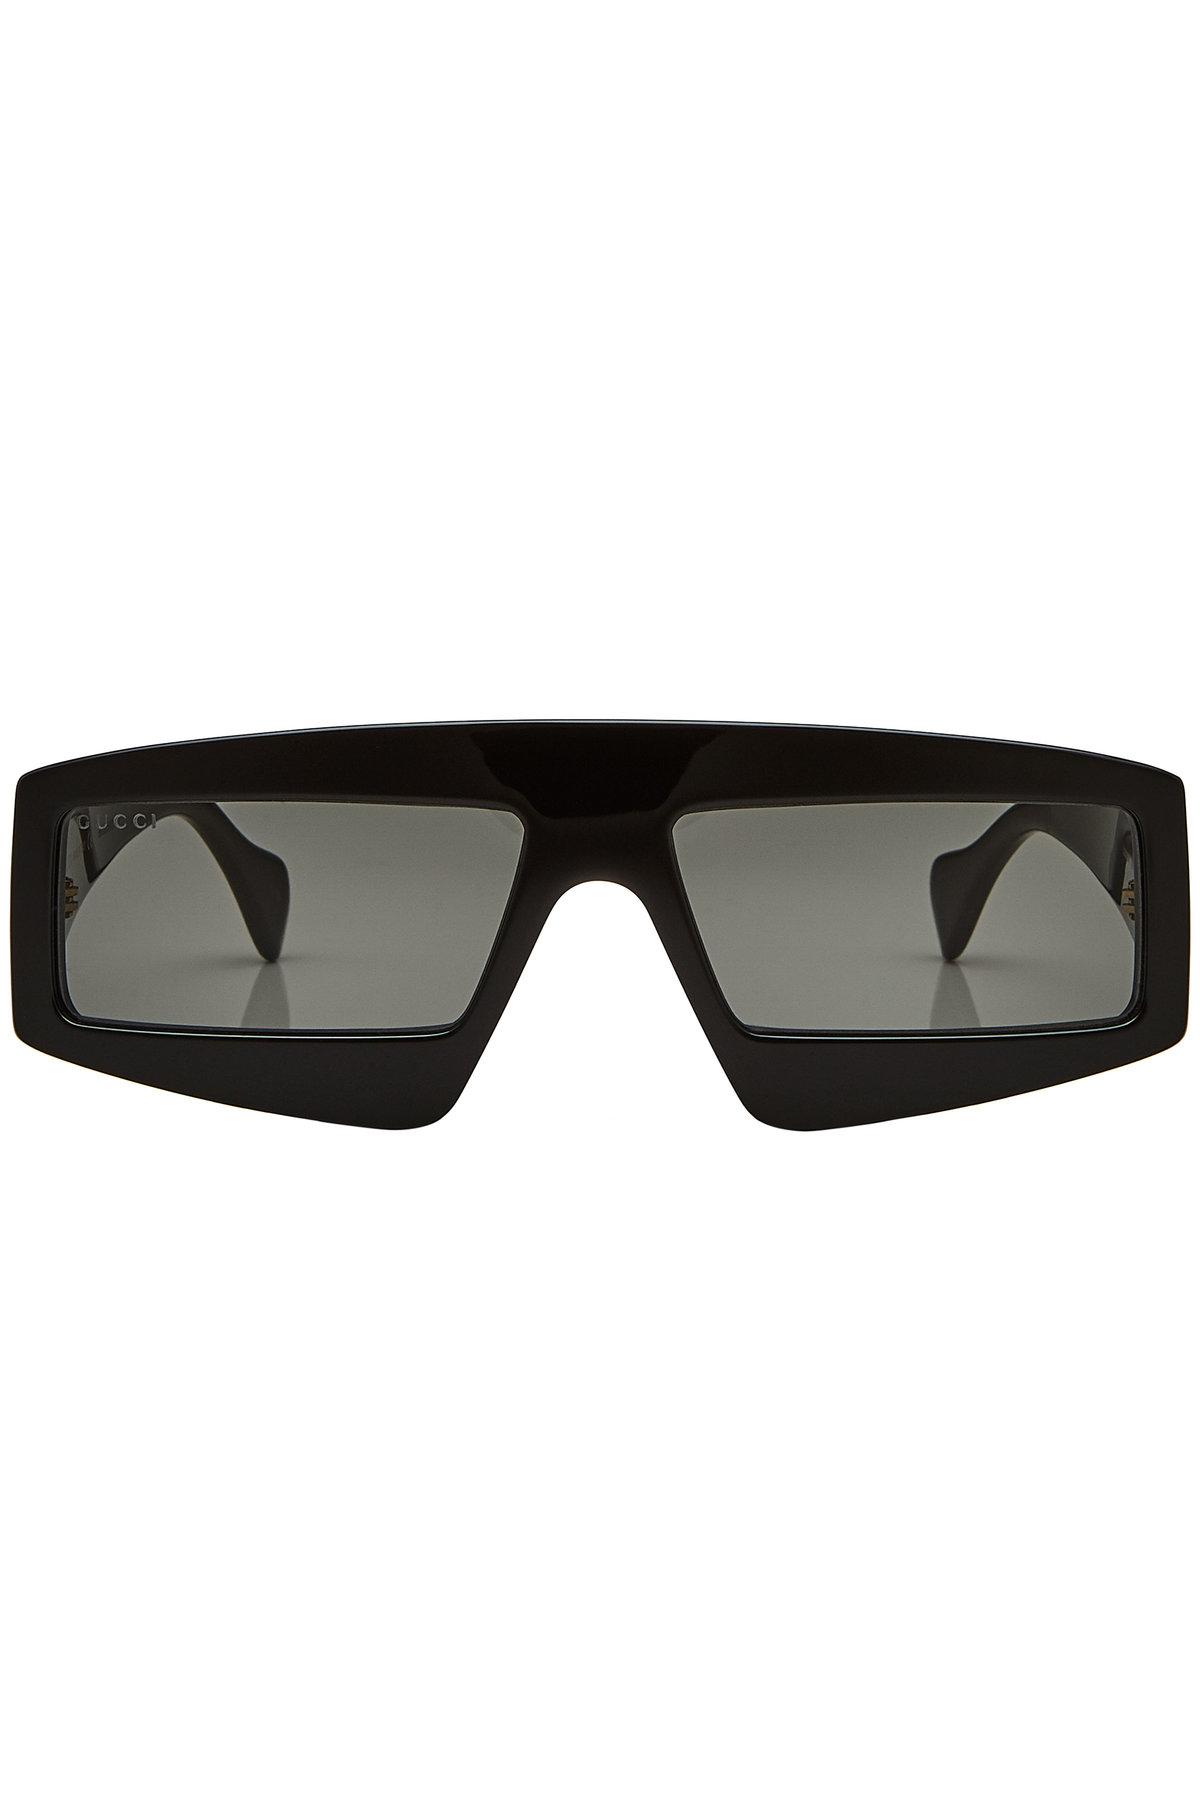 Gucci Visor Sunglasses In Black | ModeSens